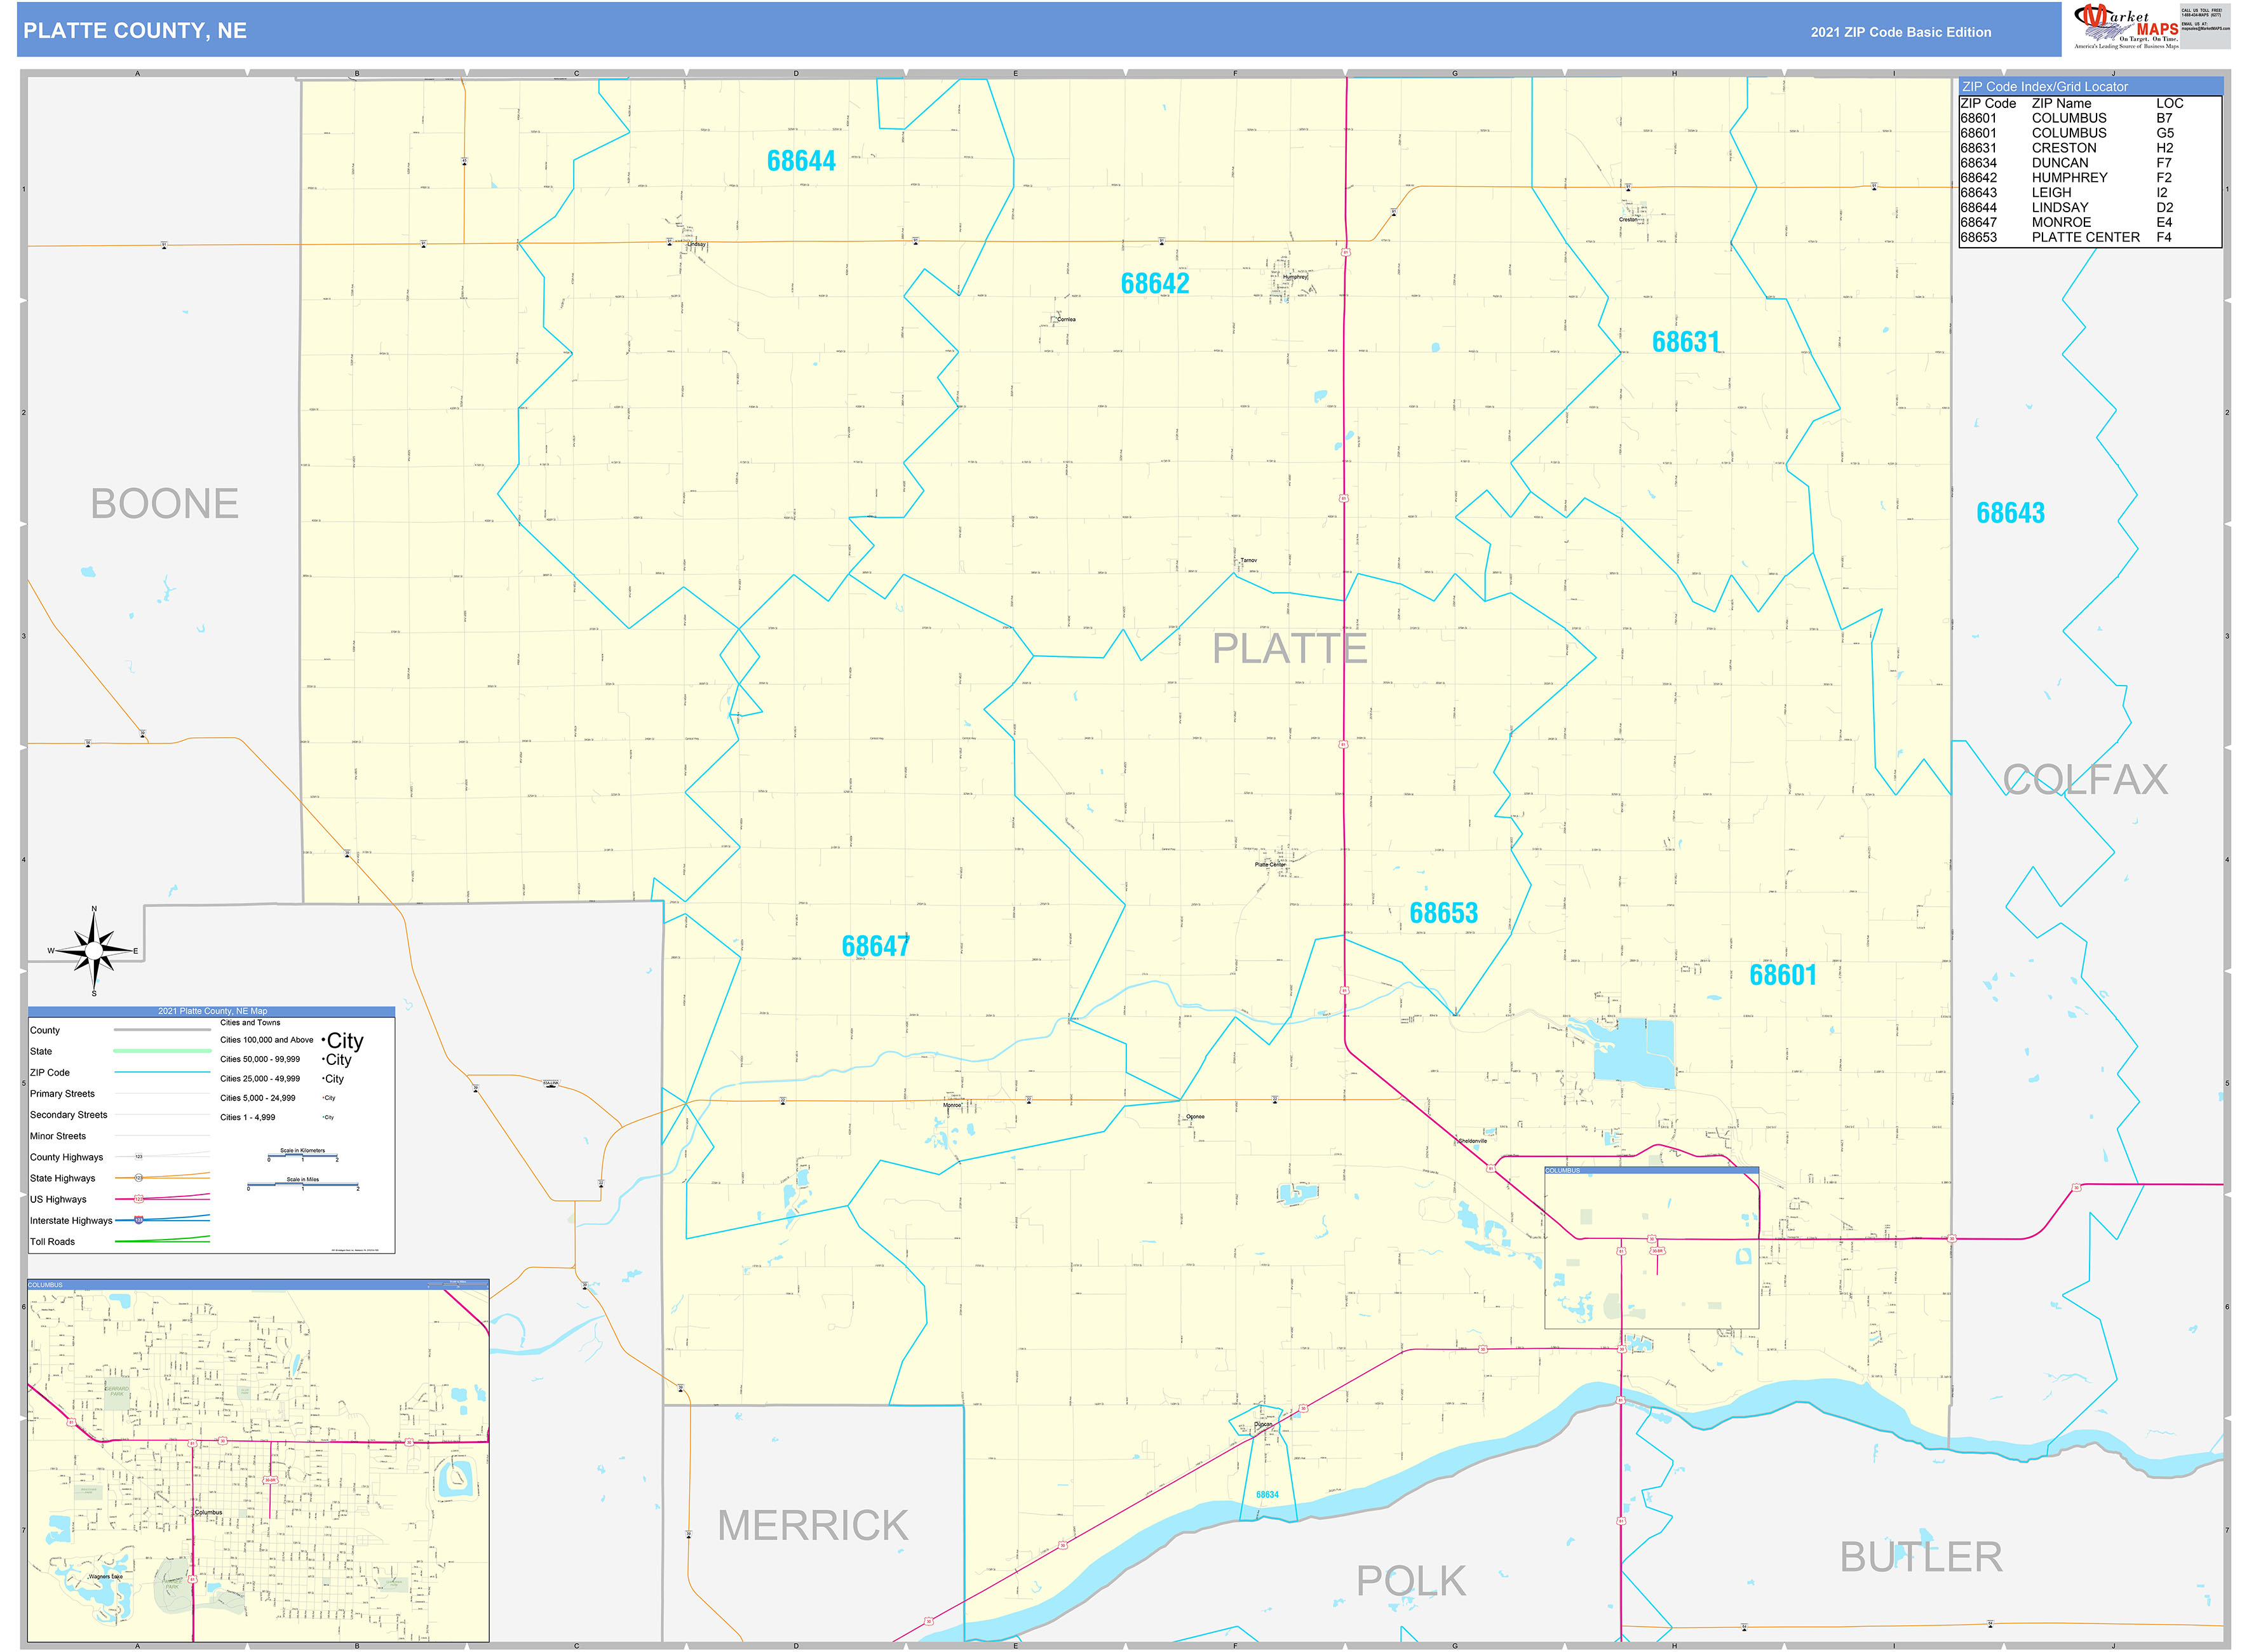 Platte County, NE Zip Code Wall Map Basic Style by MarketMAPS